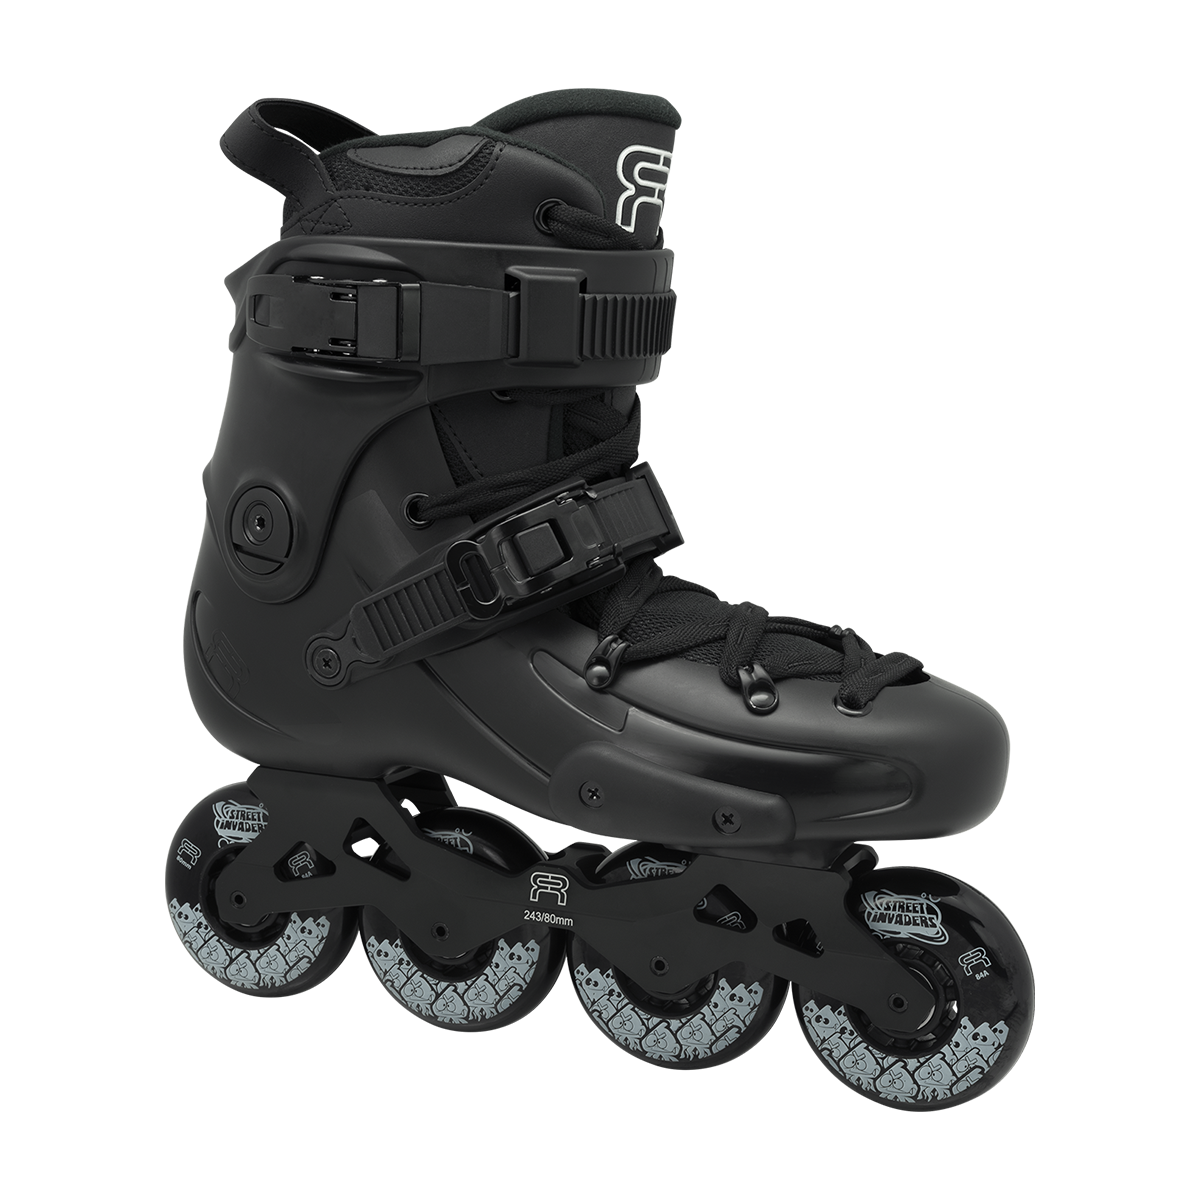 FR1 80 inline skate black with 4 wheels of 80mm